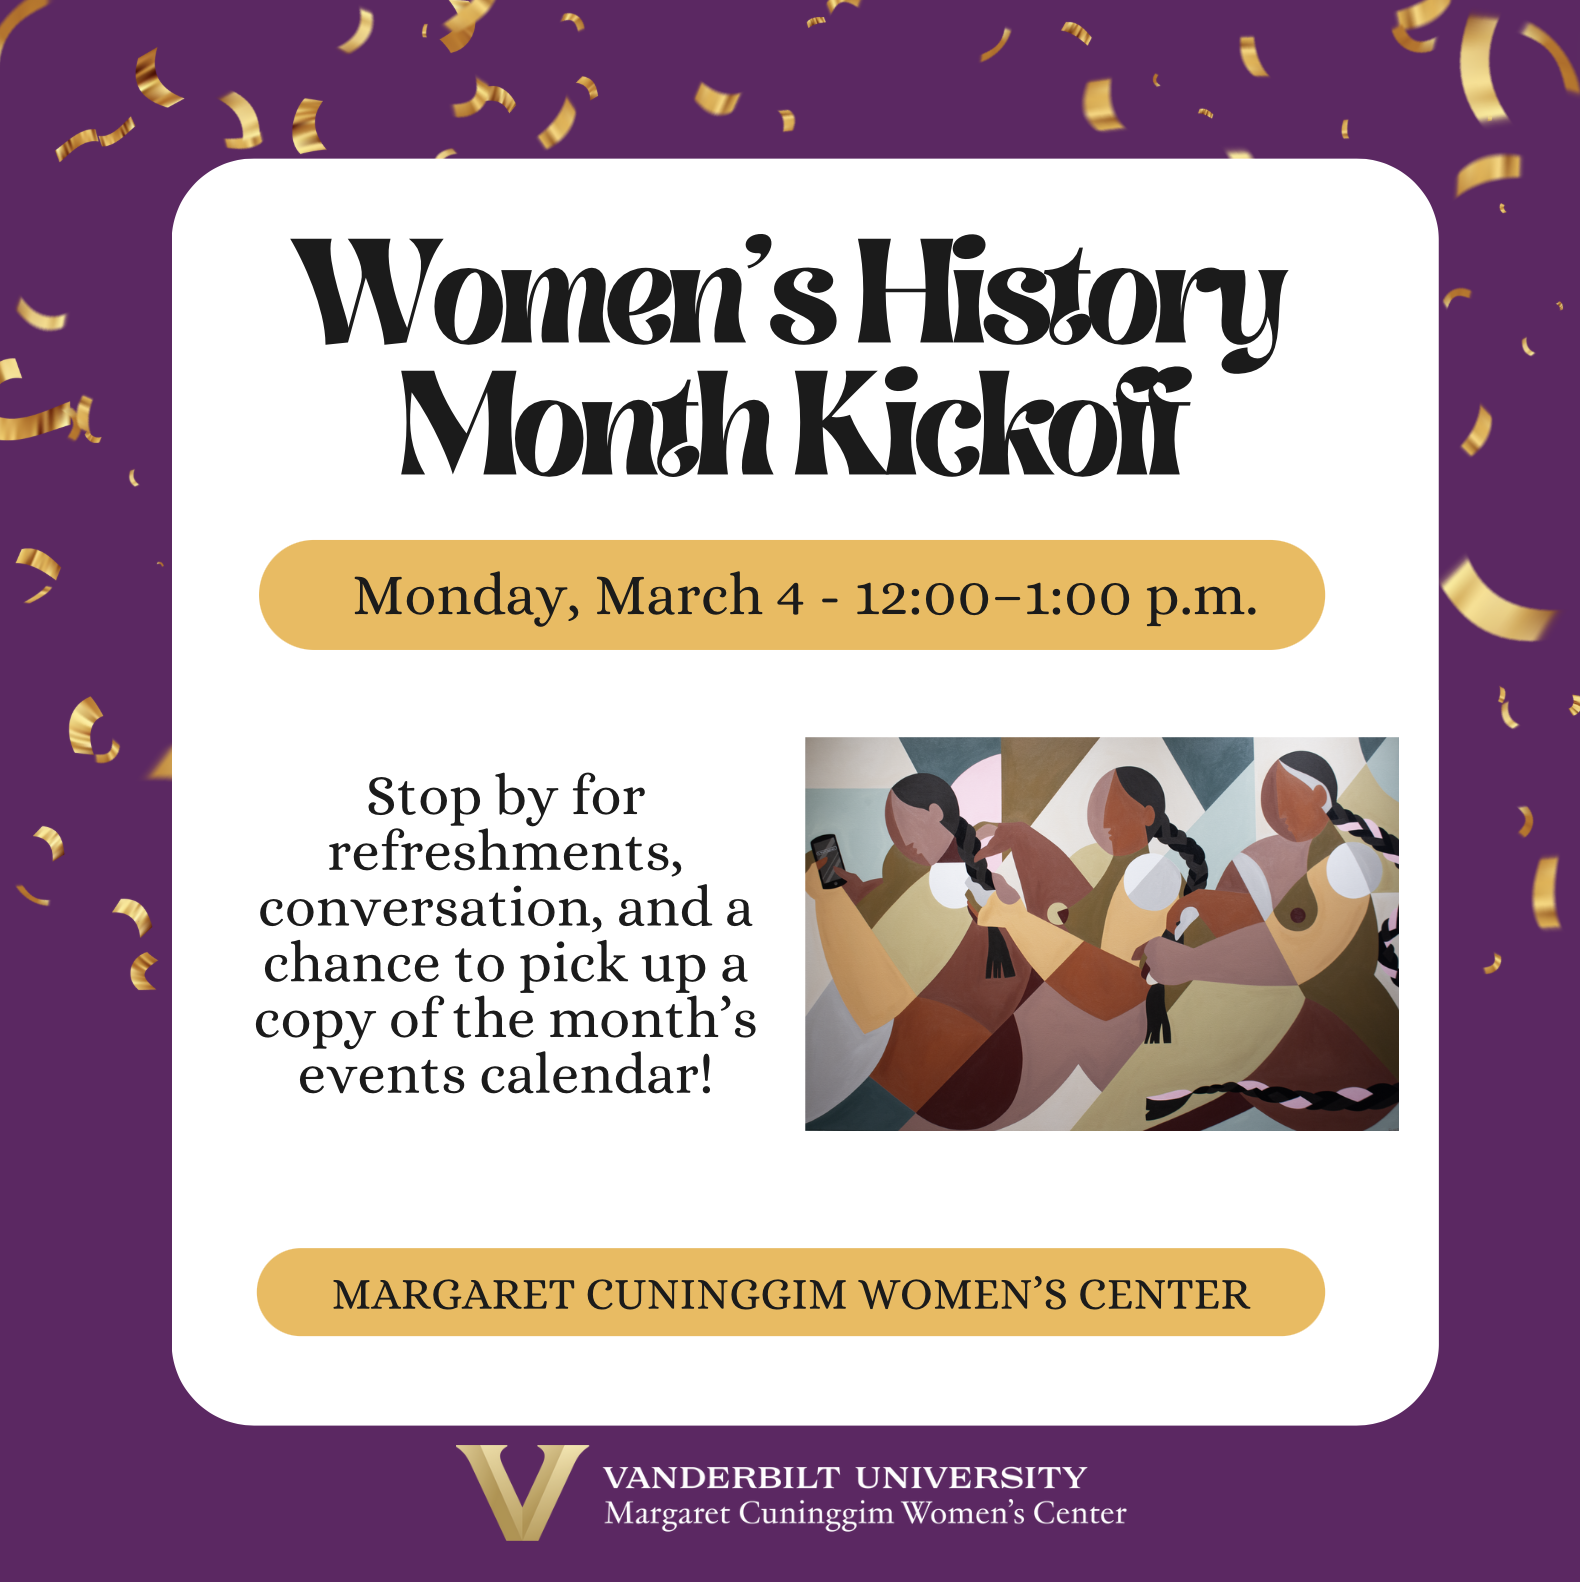 Women's History Month  Hyattsville, MD - Official Website